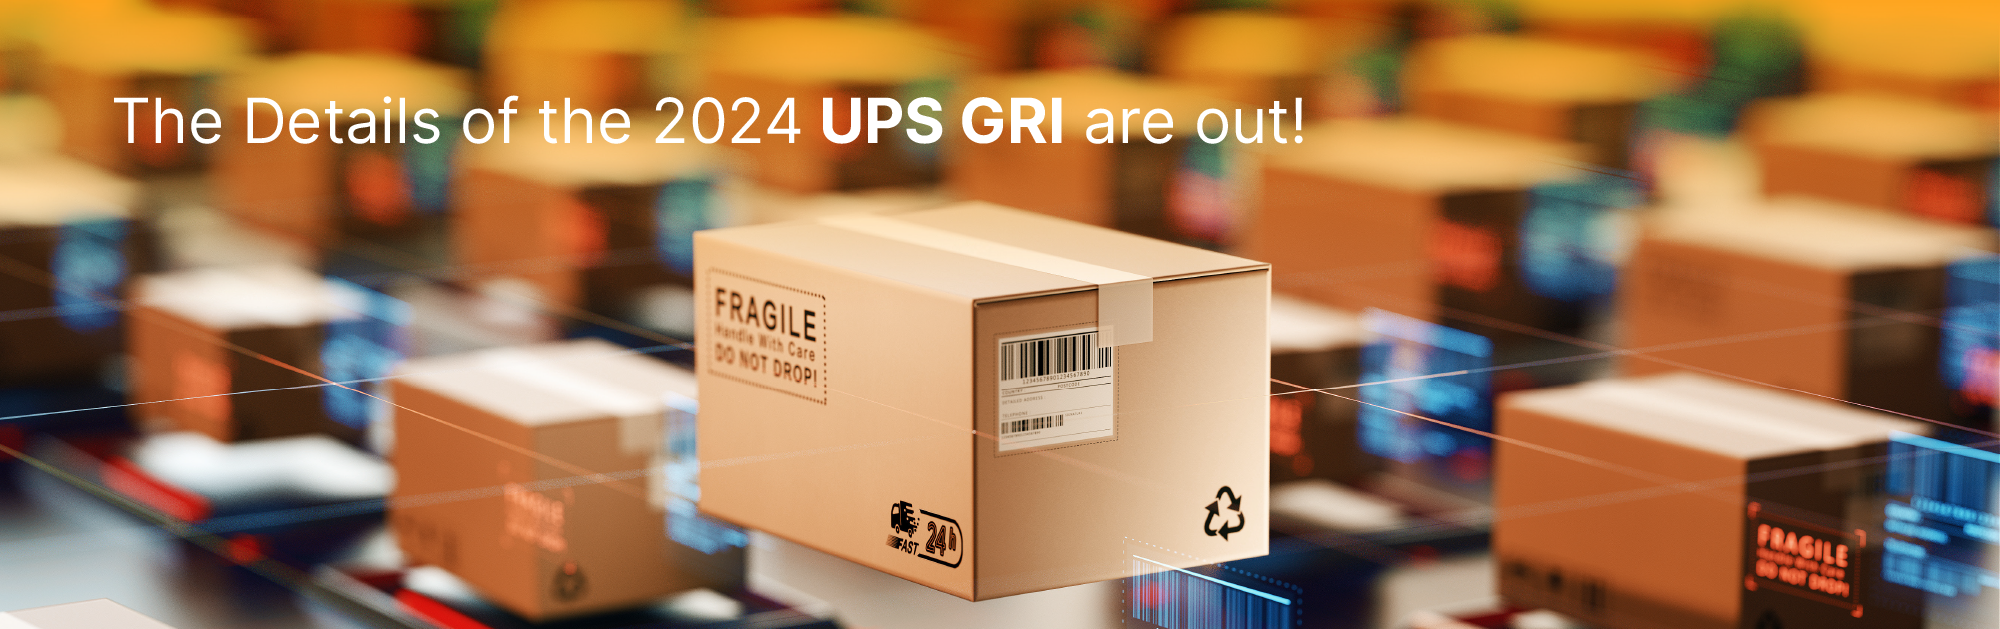 TransImpact breaks down the UPS® 2024 GRI